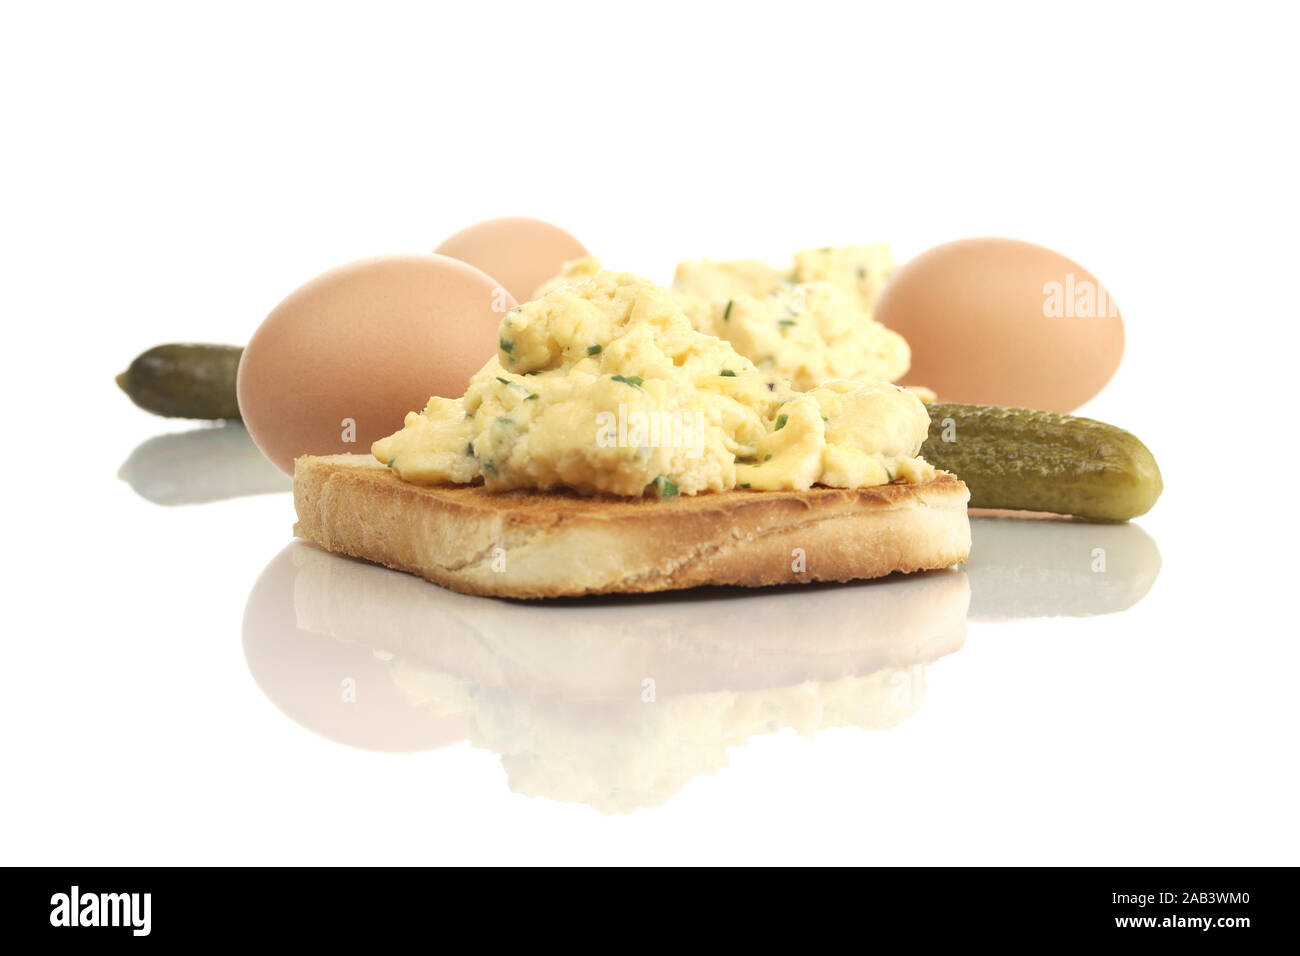 Toastbrot mit Rühreier und Gurke |Toast with scrambled eggs and cucumber| Stock Photo